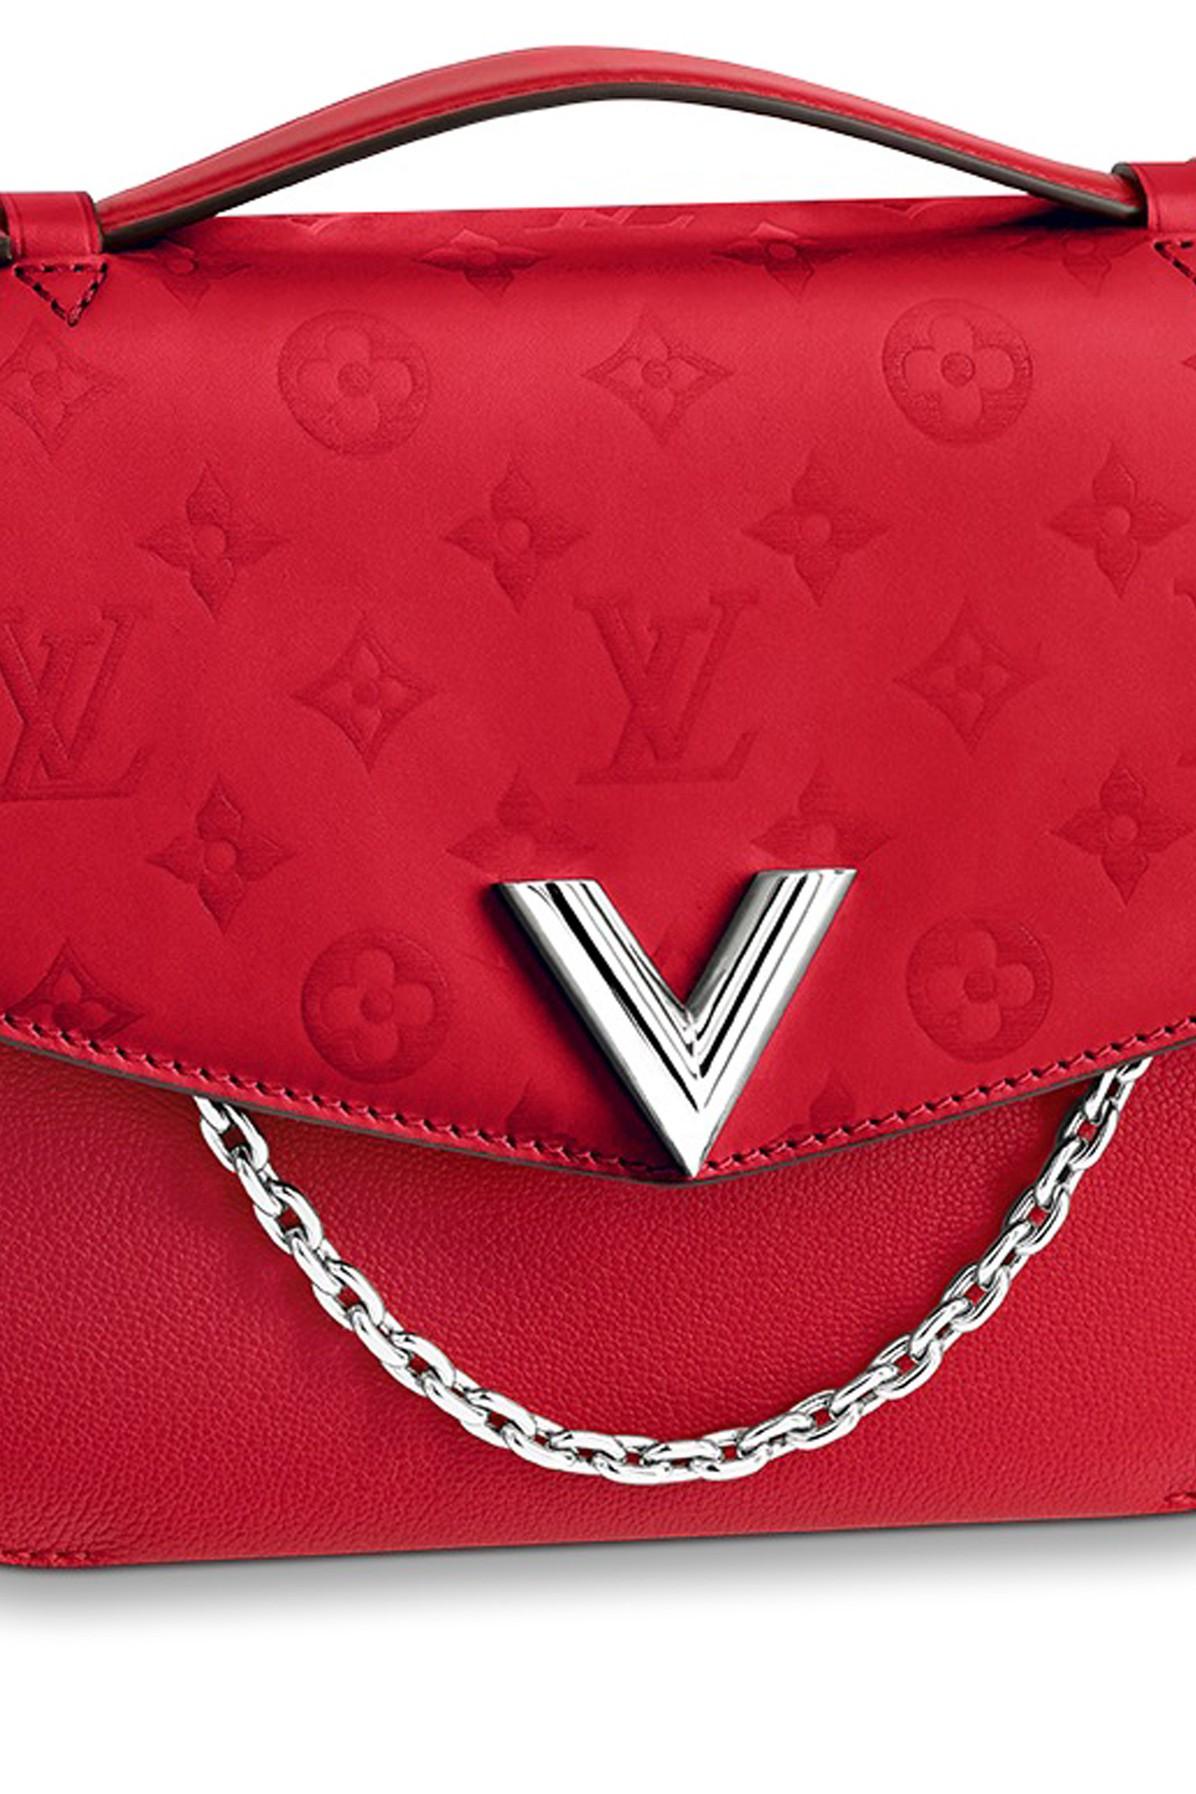 Very Messenger Bag Louis Vuitton 6273